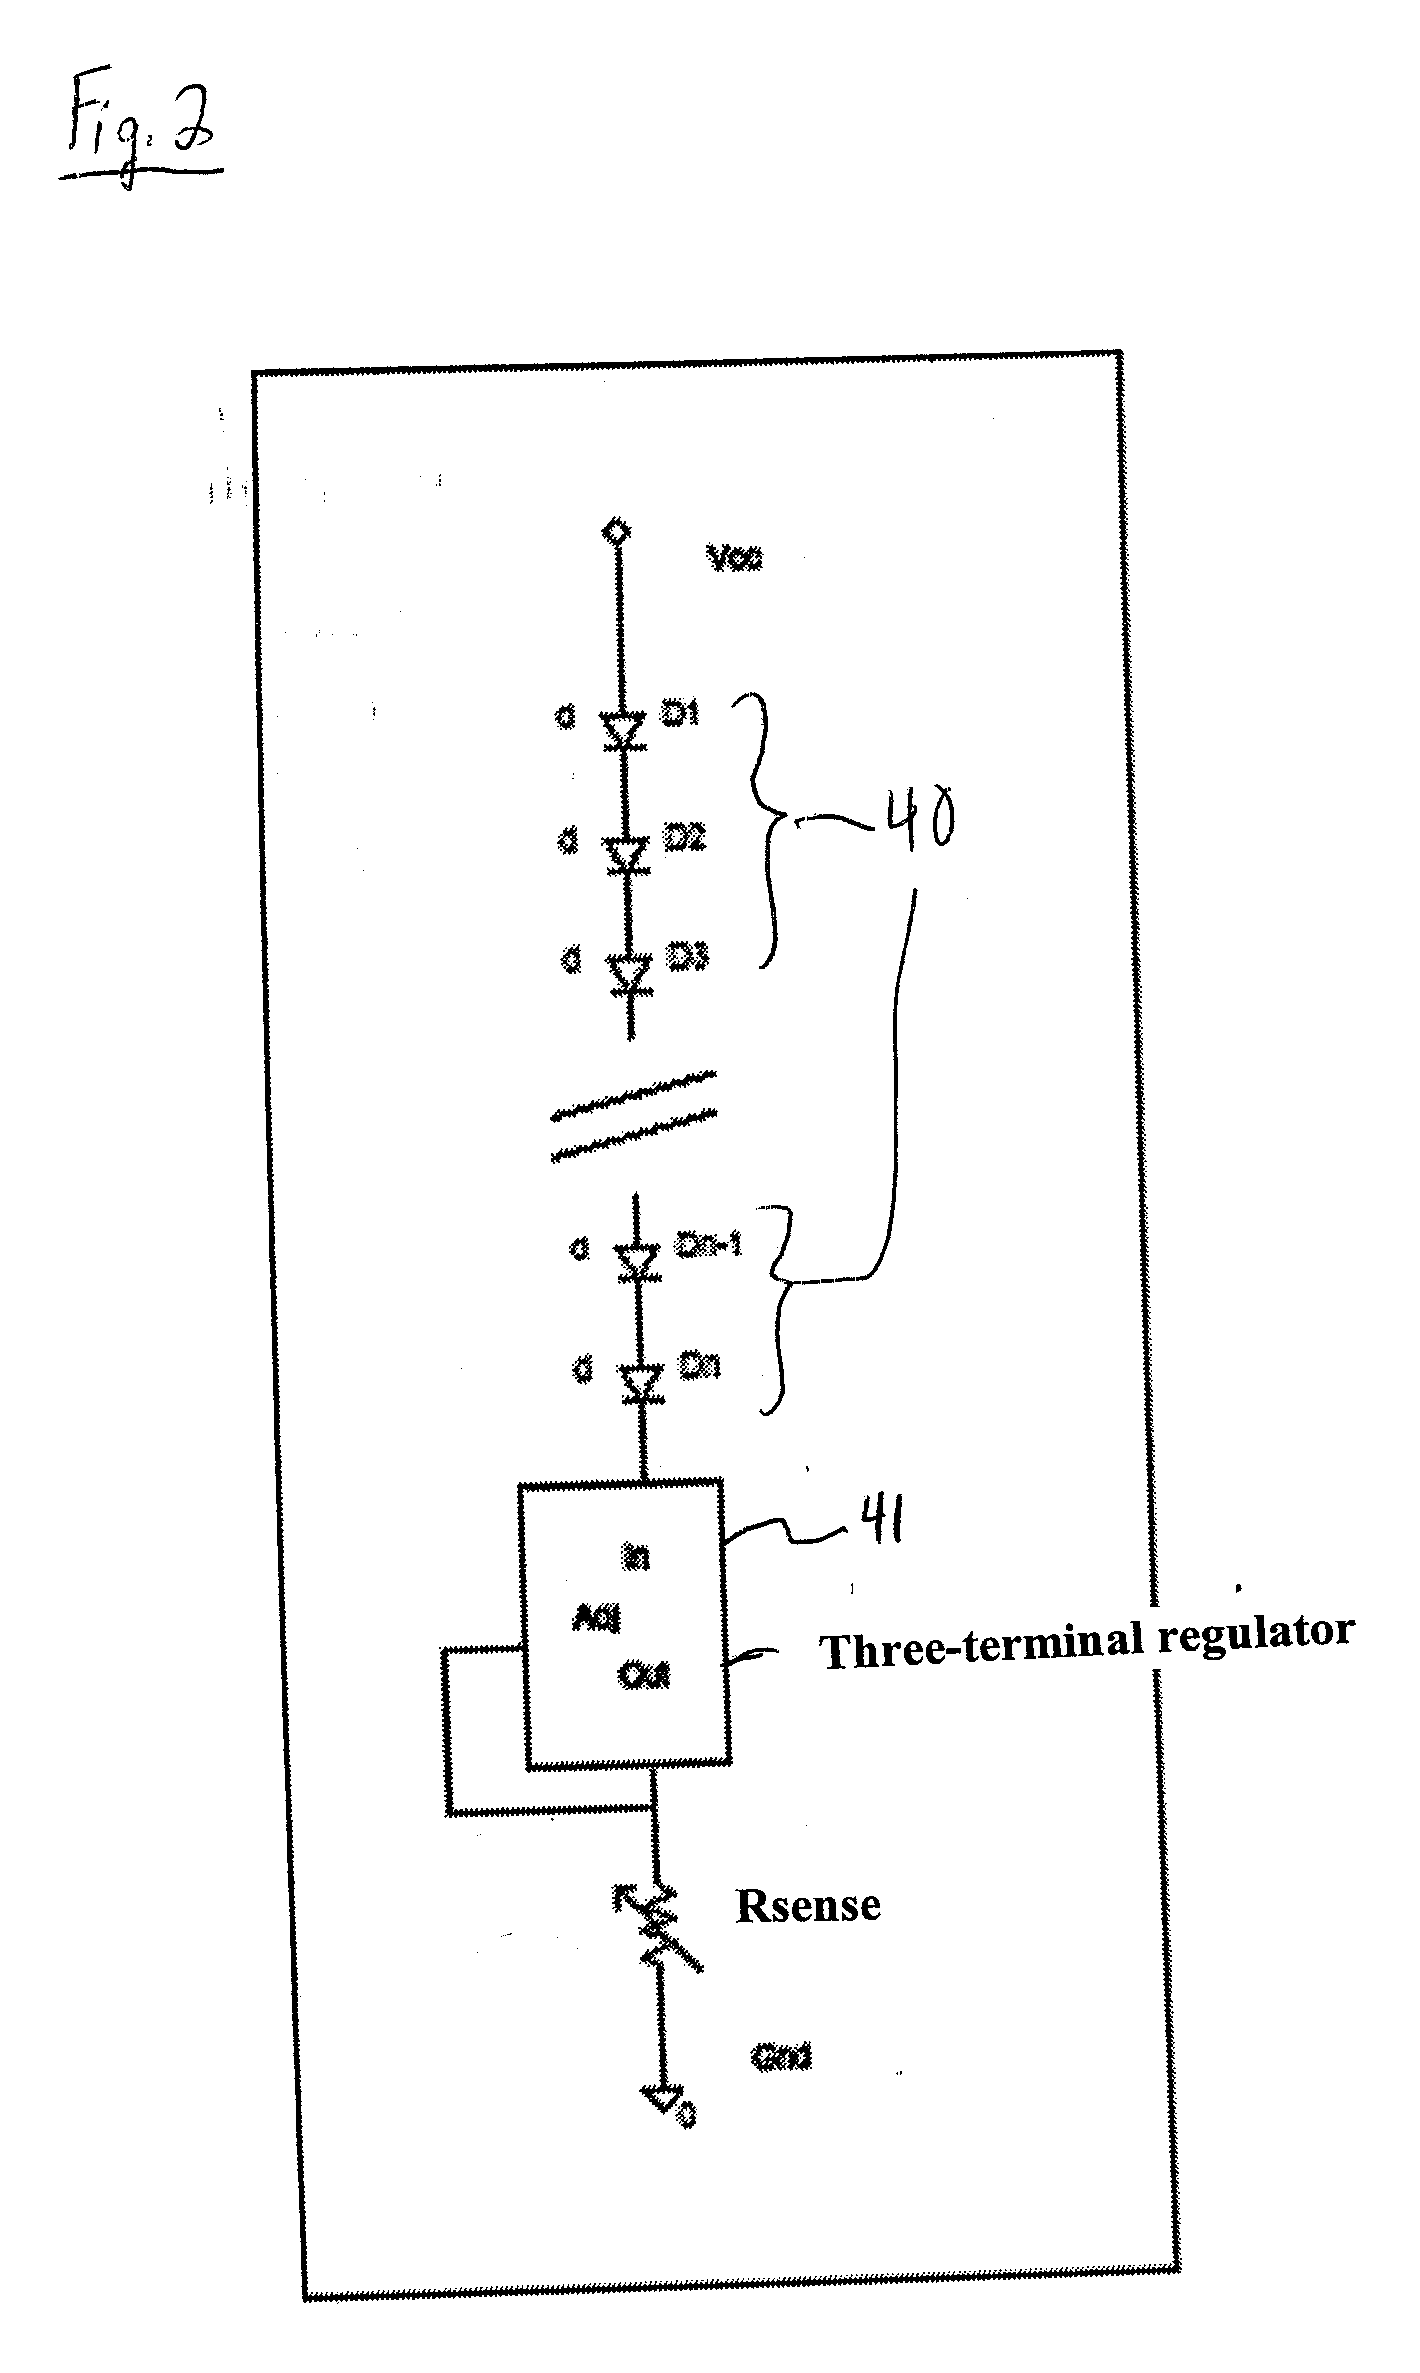 Circuit for lighting device, and method of lighting